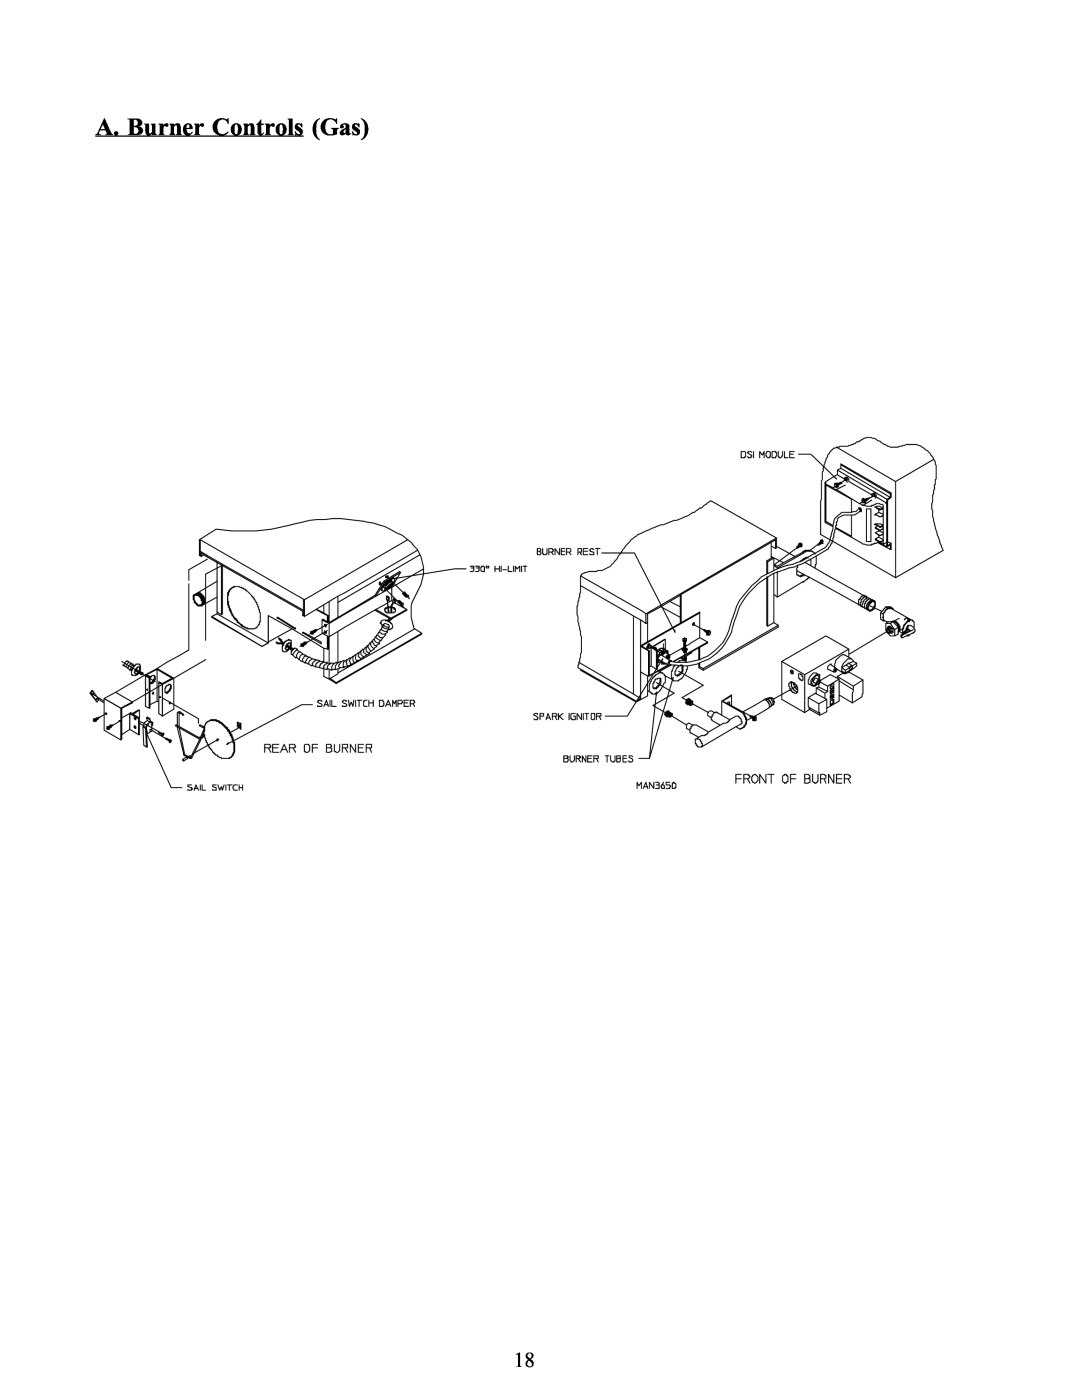 American Dryer Corp WDA-385 service manual A. Burner Controls Gas 